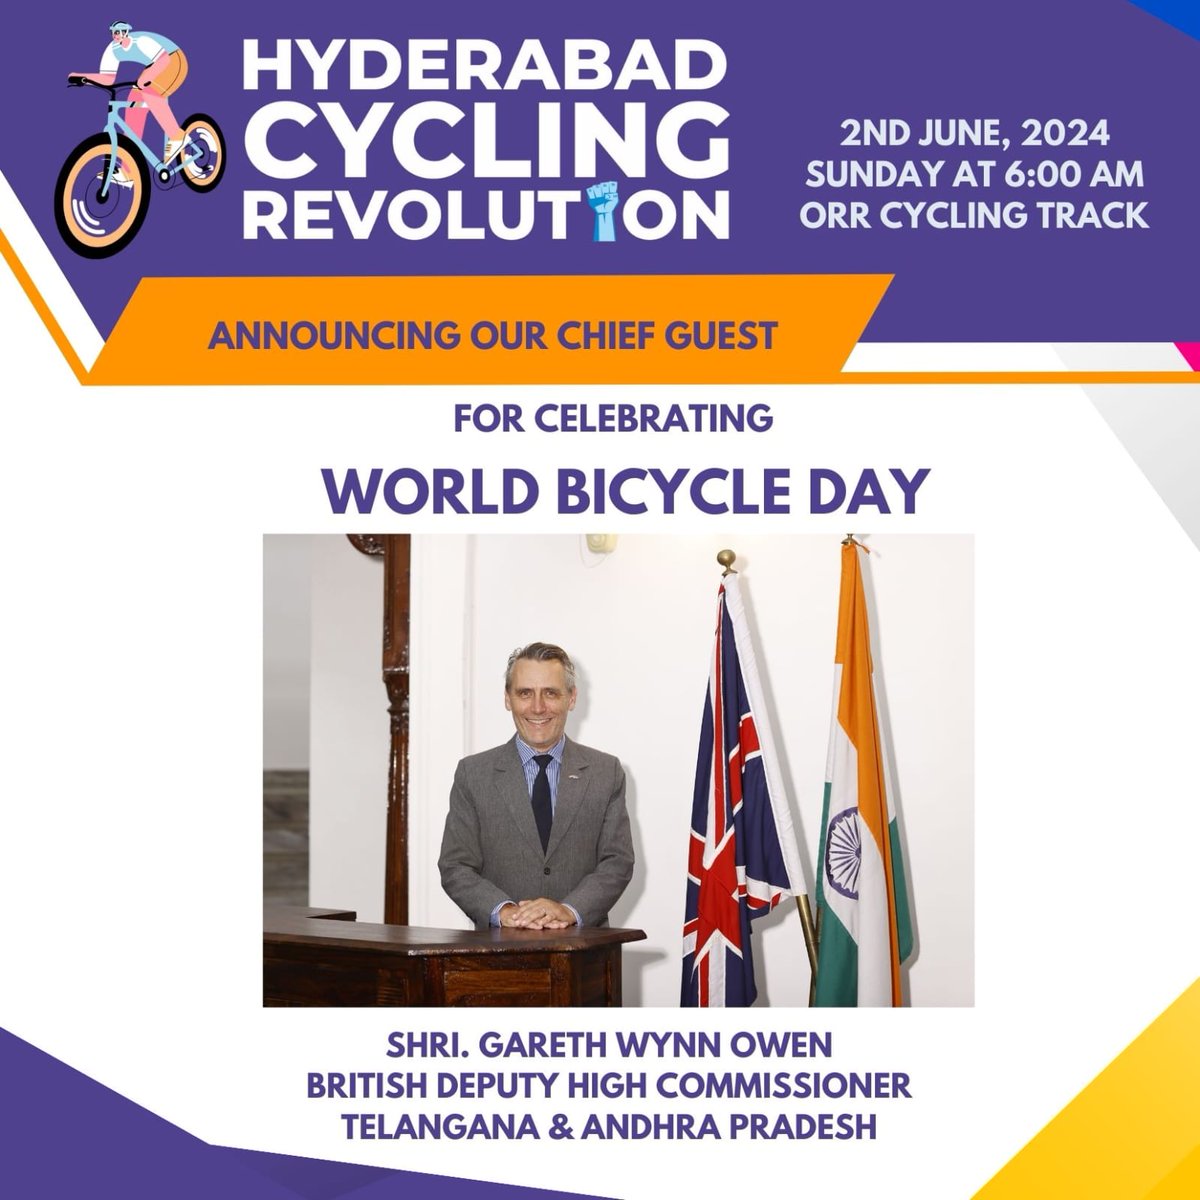 #HyderabadCyclingRevolution inviting the #cyclingCommunityofHyderabad to celebrate #WorldBicycleDay 2024 at @HydCyclingTrack  @md_hgcl 

Thanks Shri @UKinHyderabad for being our chief guest 

@TelanganaCMO  @sselvan @HumansofHyd  @Anjani_Tsn @Ravi_1836 @Andrew007Uk @UKinIndia